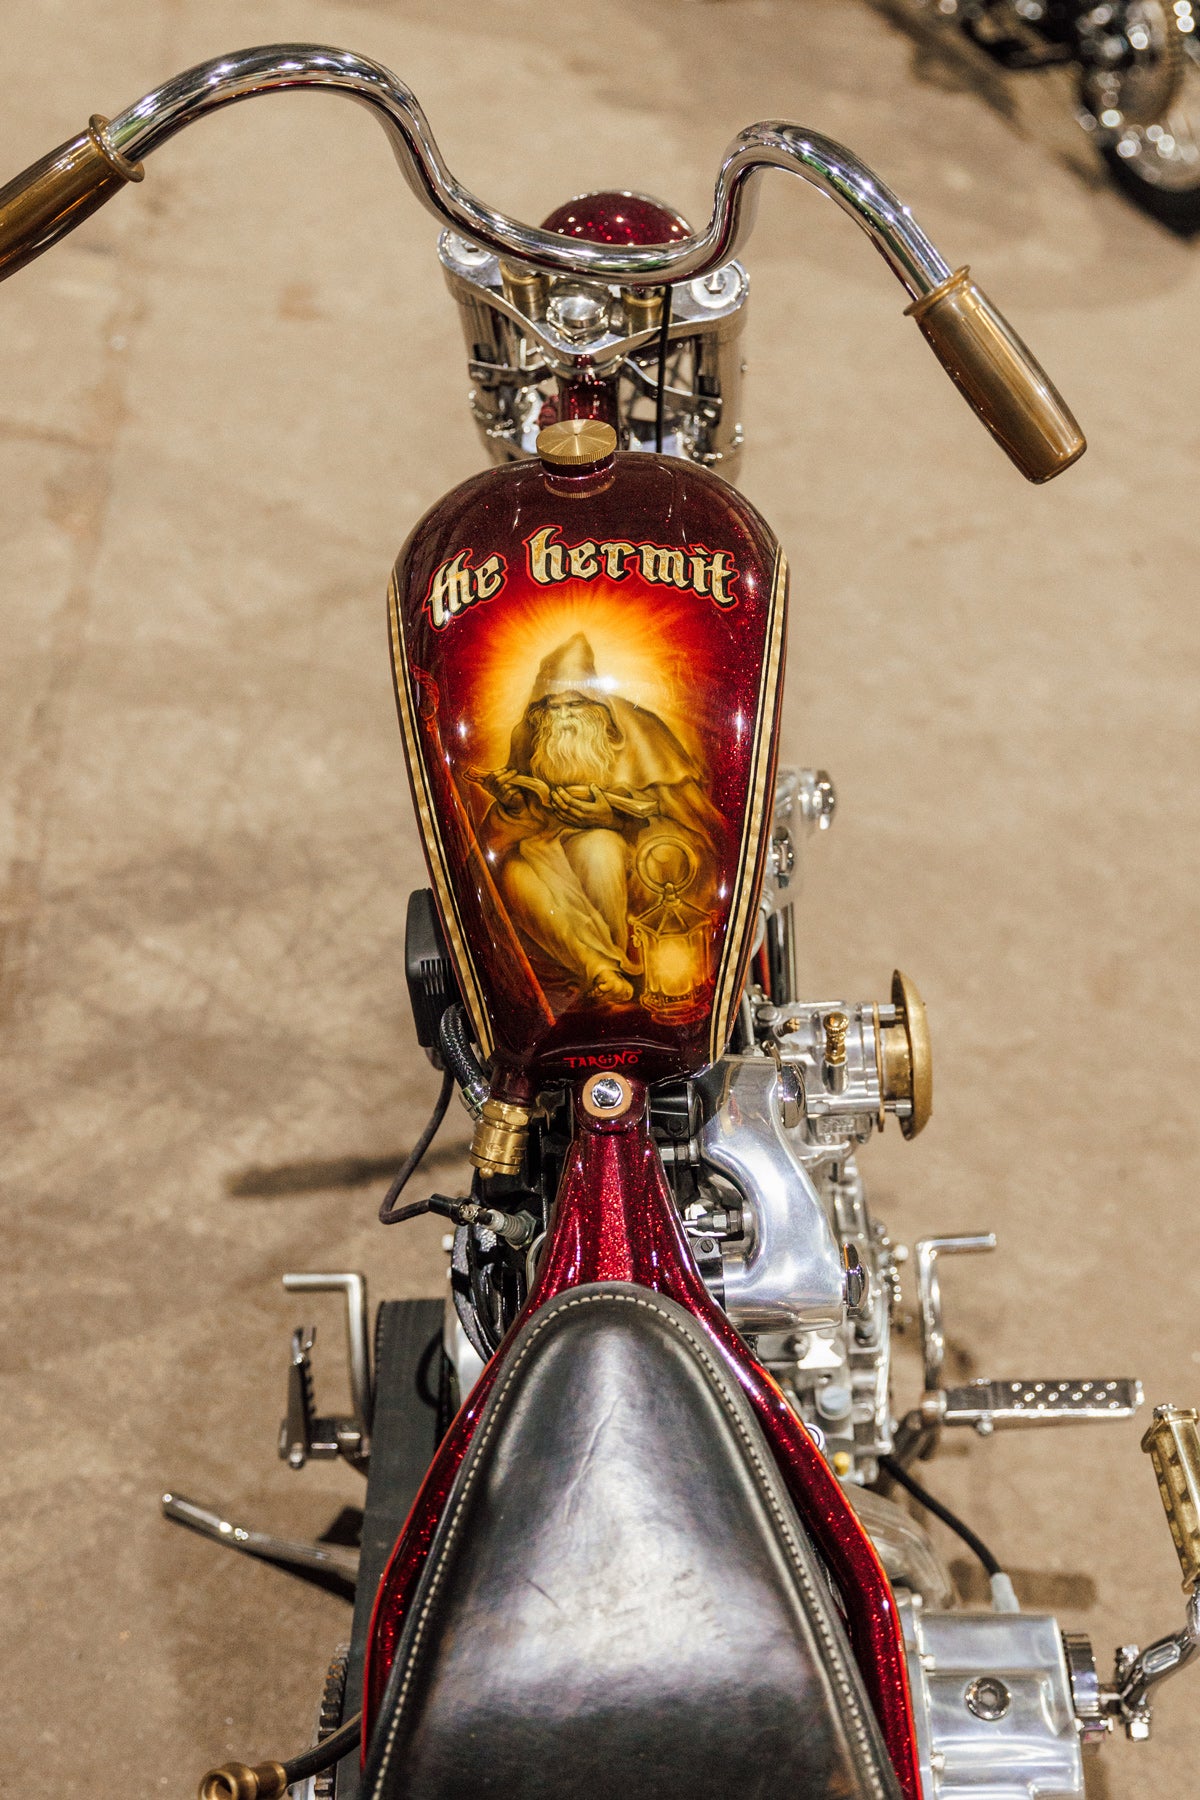 Glory Daze Vintage Custom Motorcycle Chopper Show Pittsburgh PA 2023